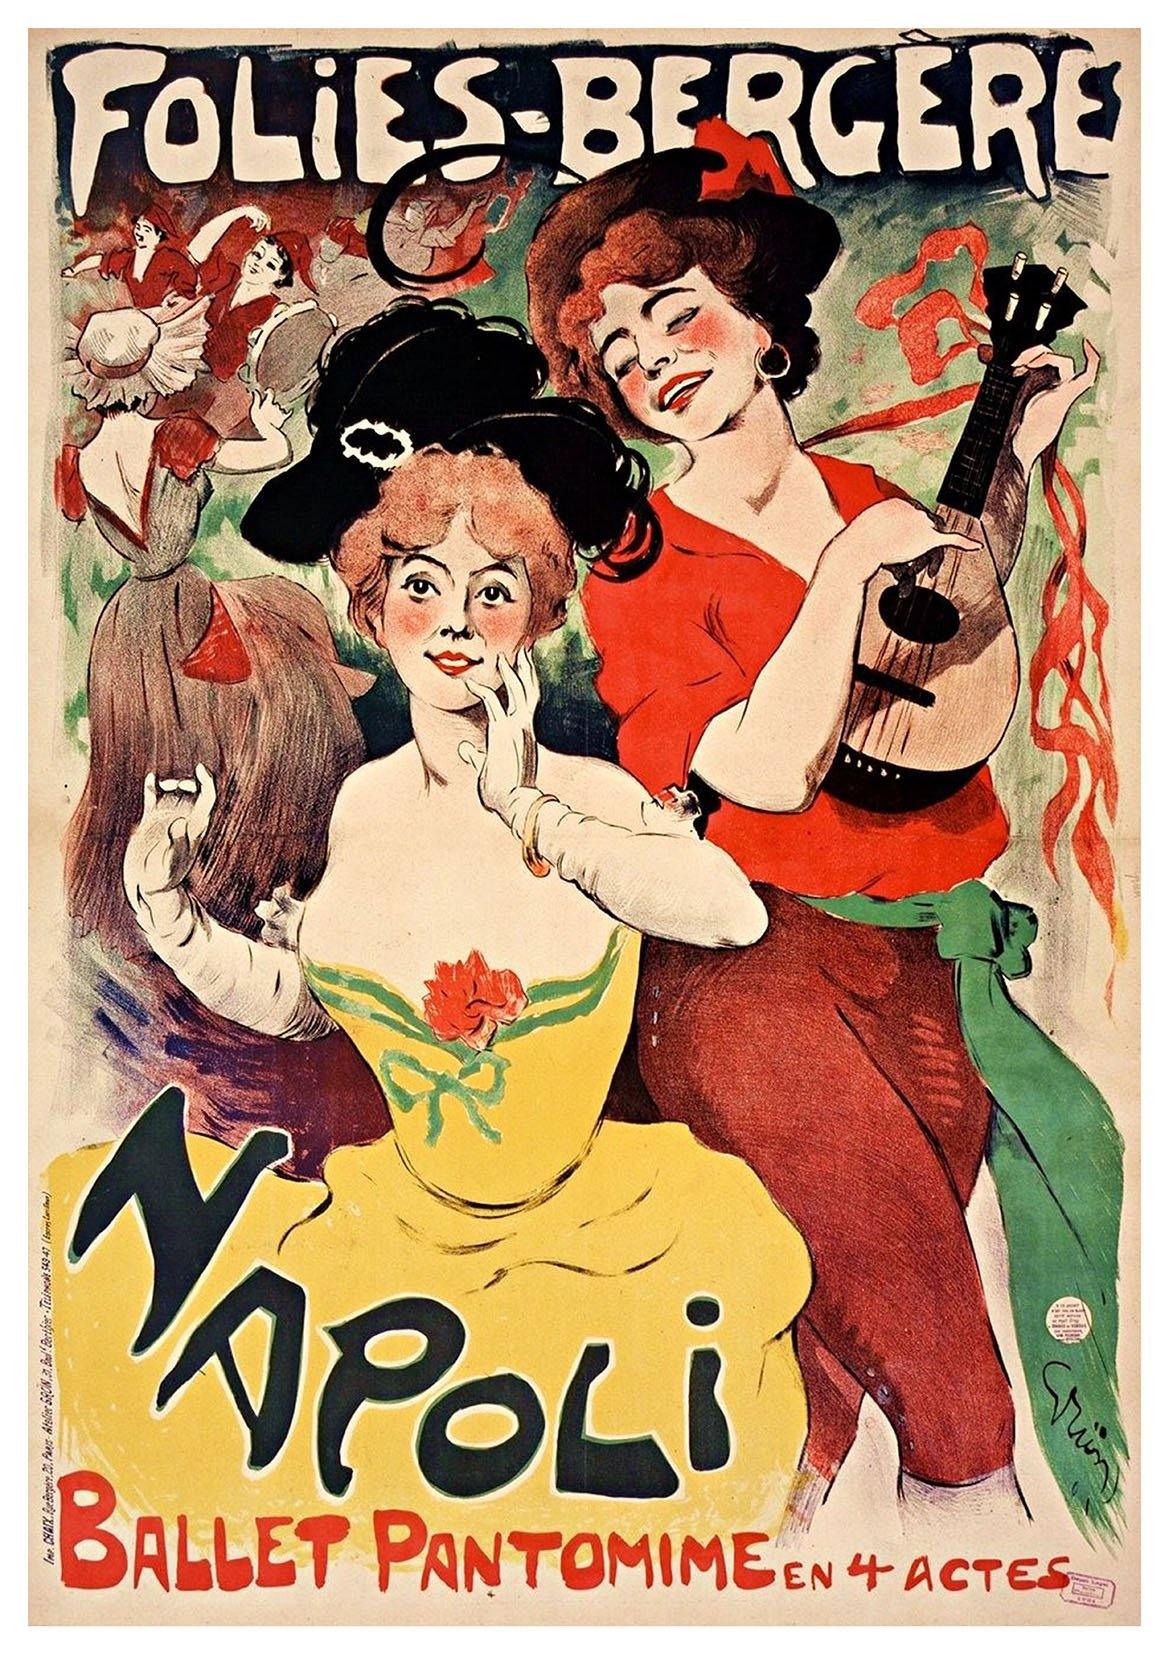 FOLIES BERGÈRE POSTER: French Cabaret Advert Print - Pimlico Prints